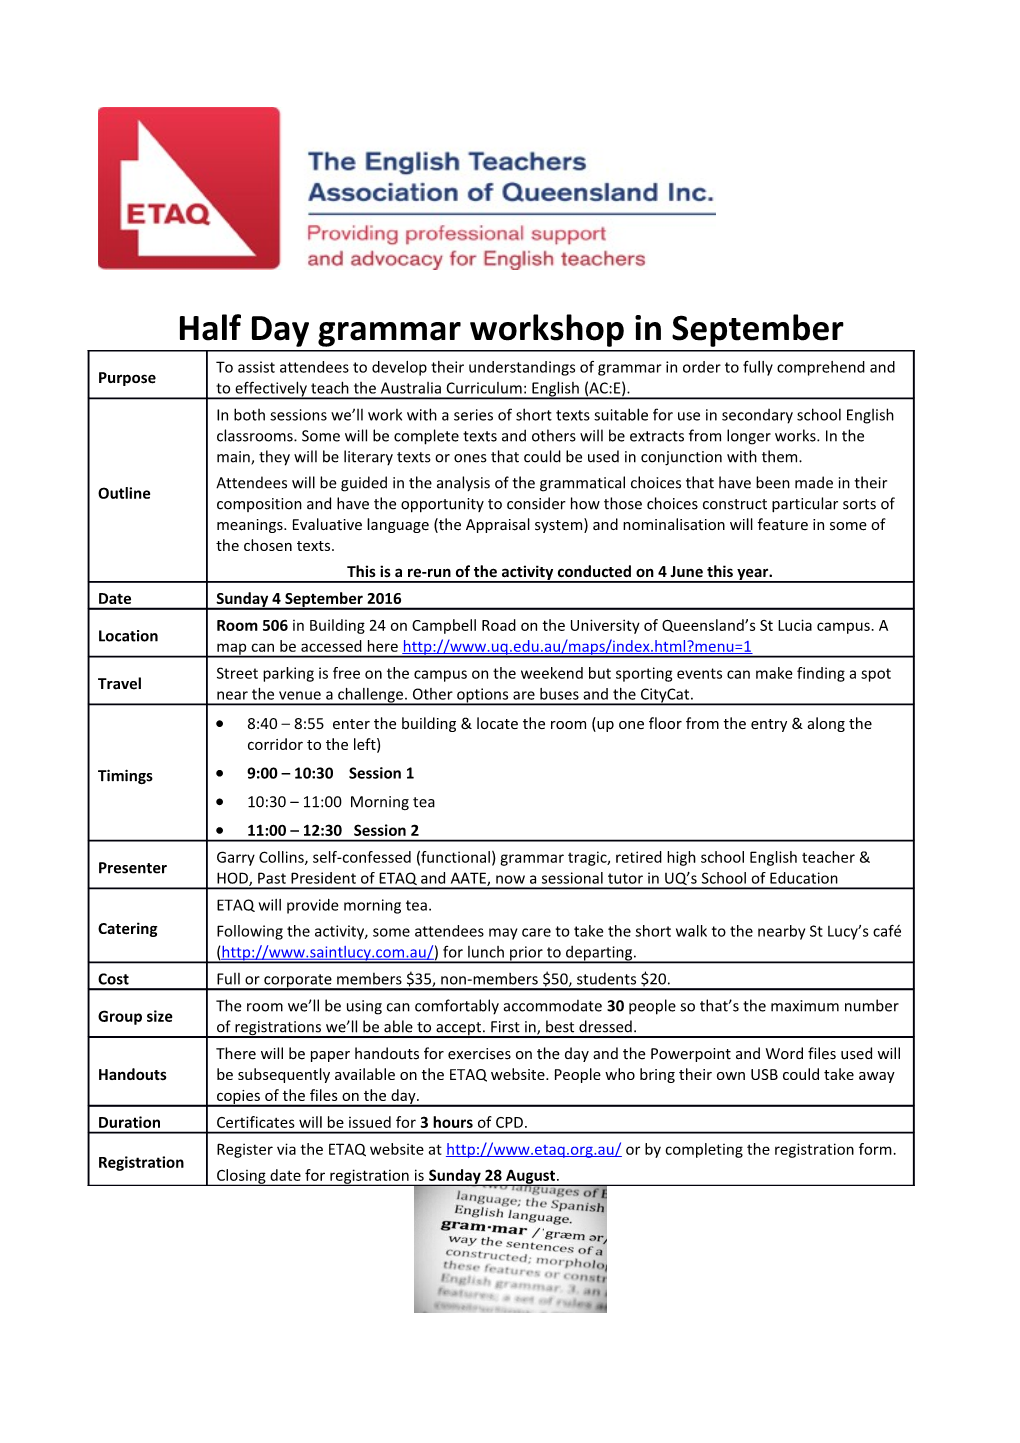 Half Day Grammar Workshop in September